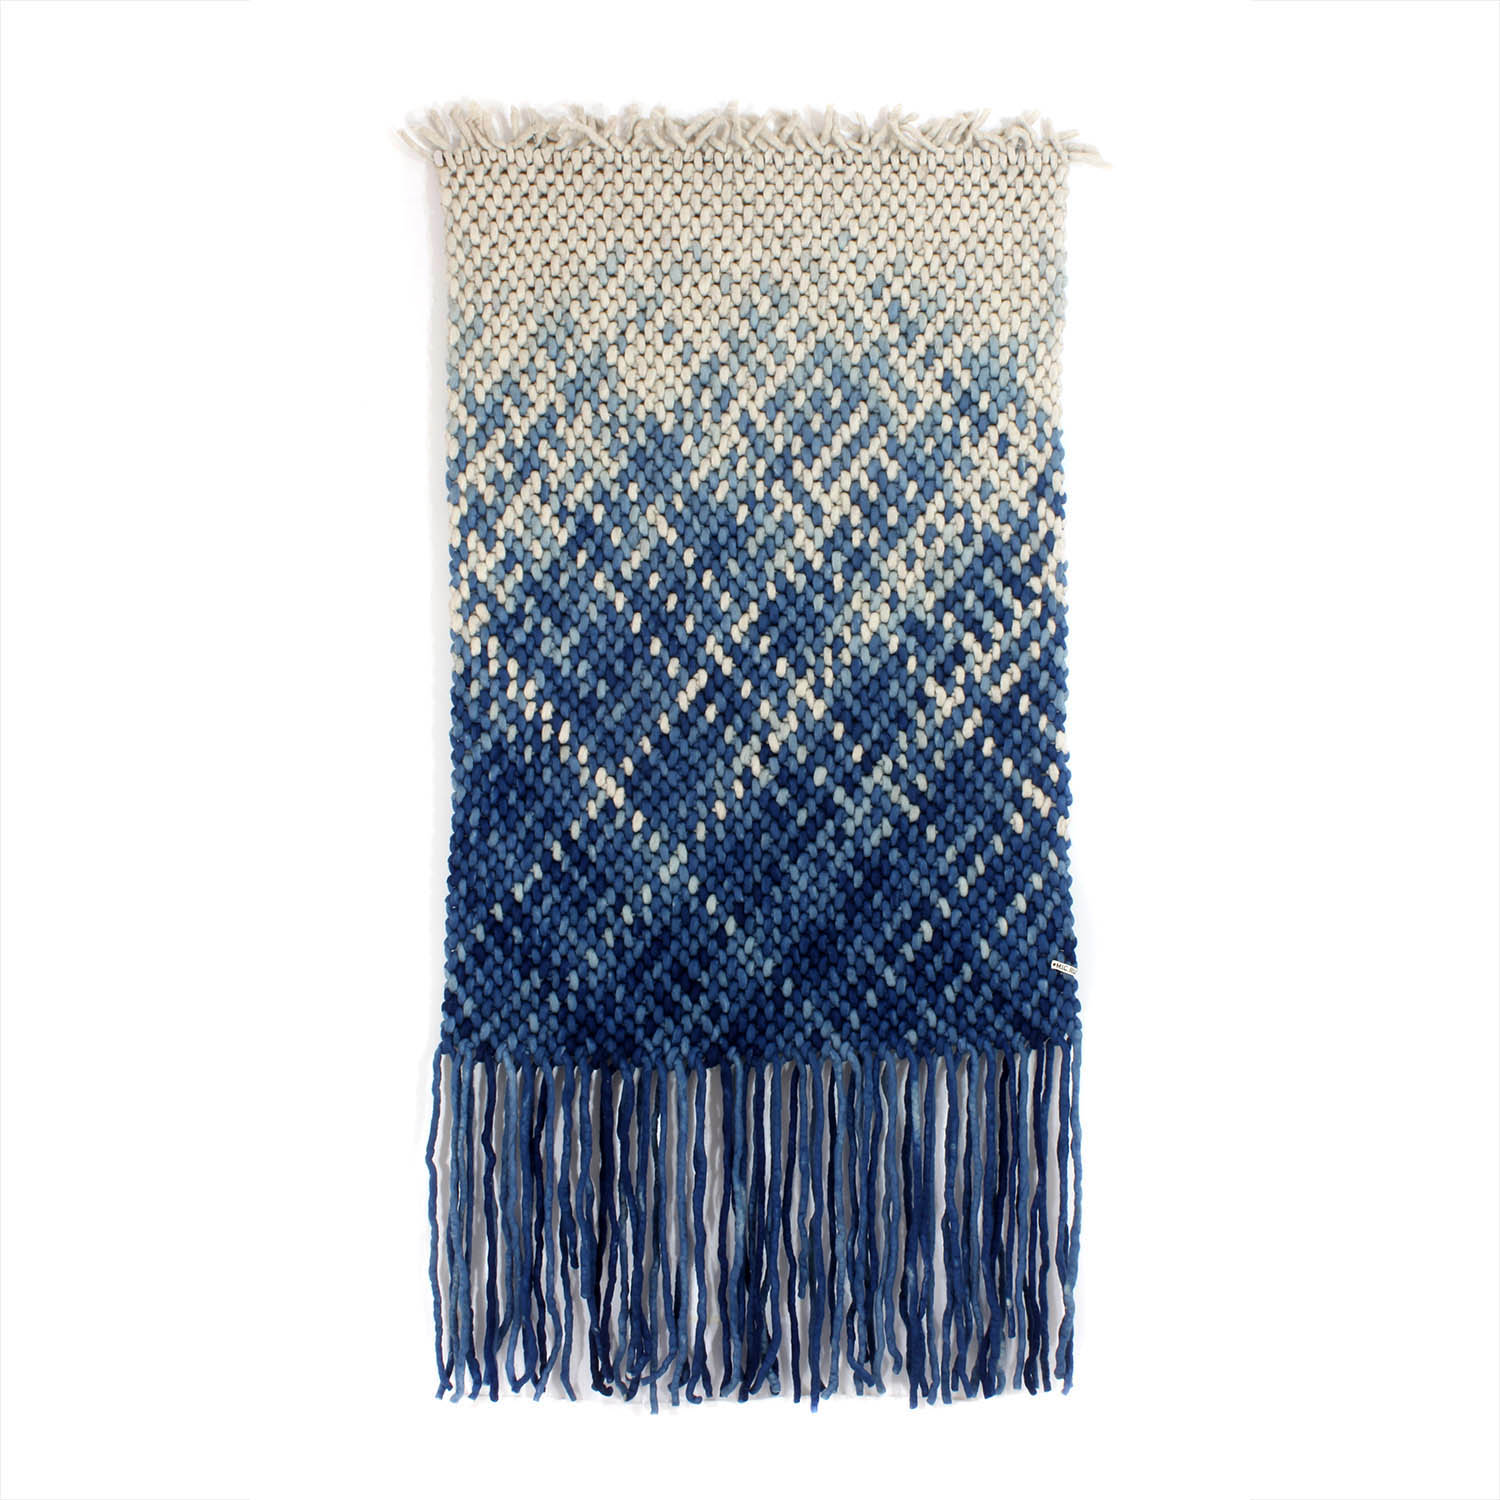 Tapestry-indigoflow-rhoe-sheep-wool-plant-color-carpet-michelle-mohr-tapestry-wool-carpet